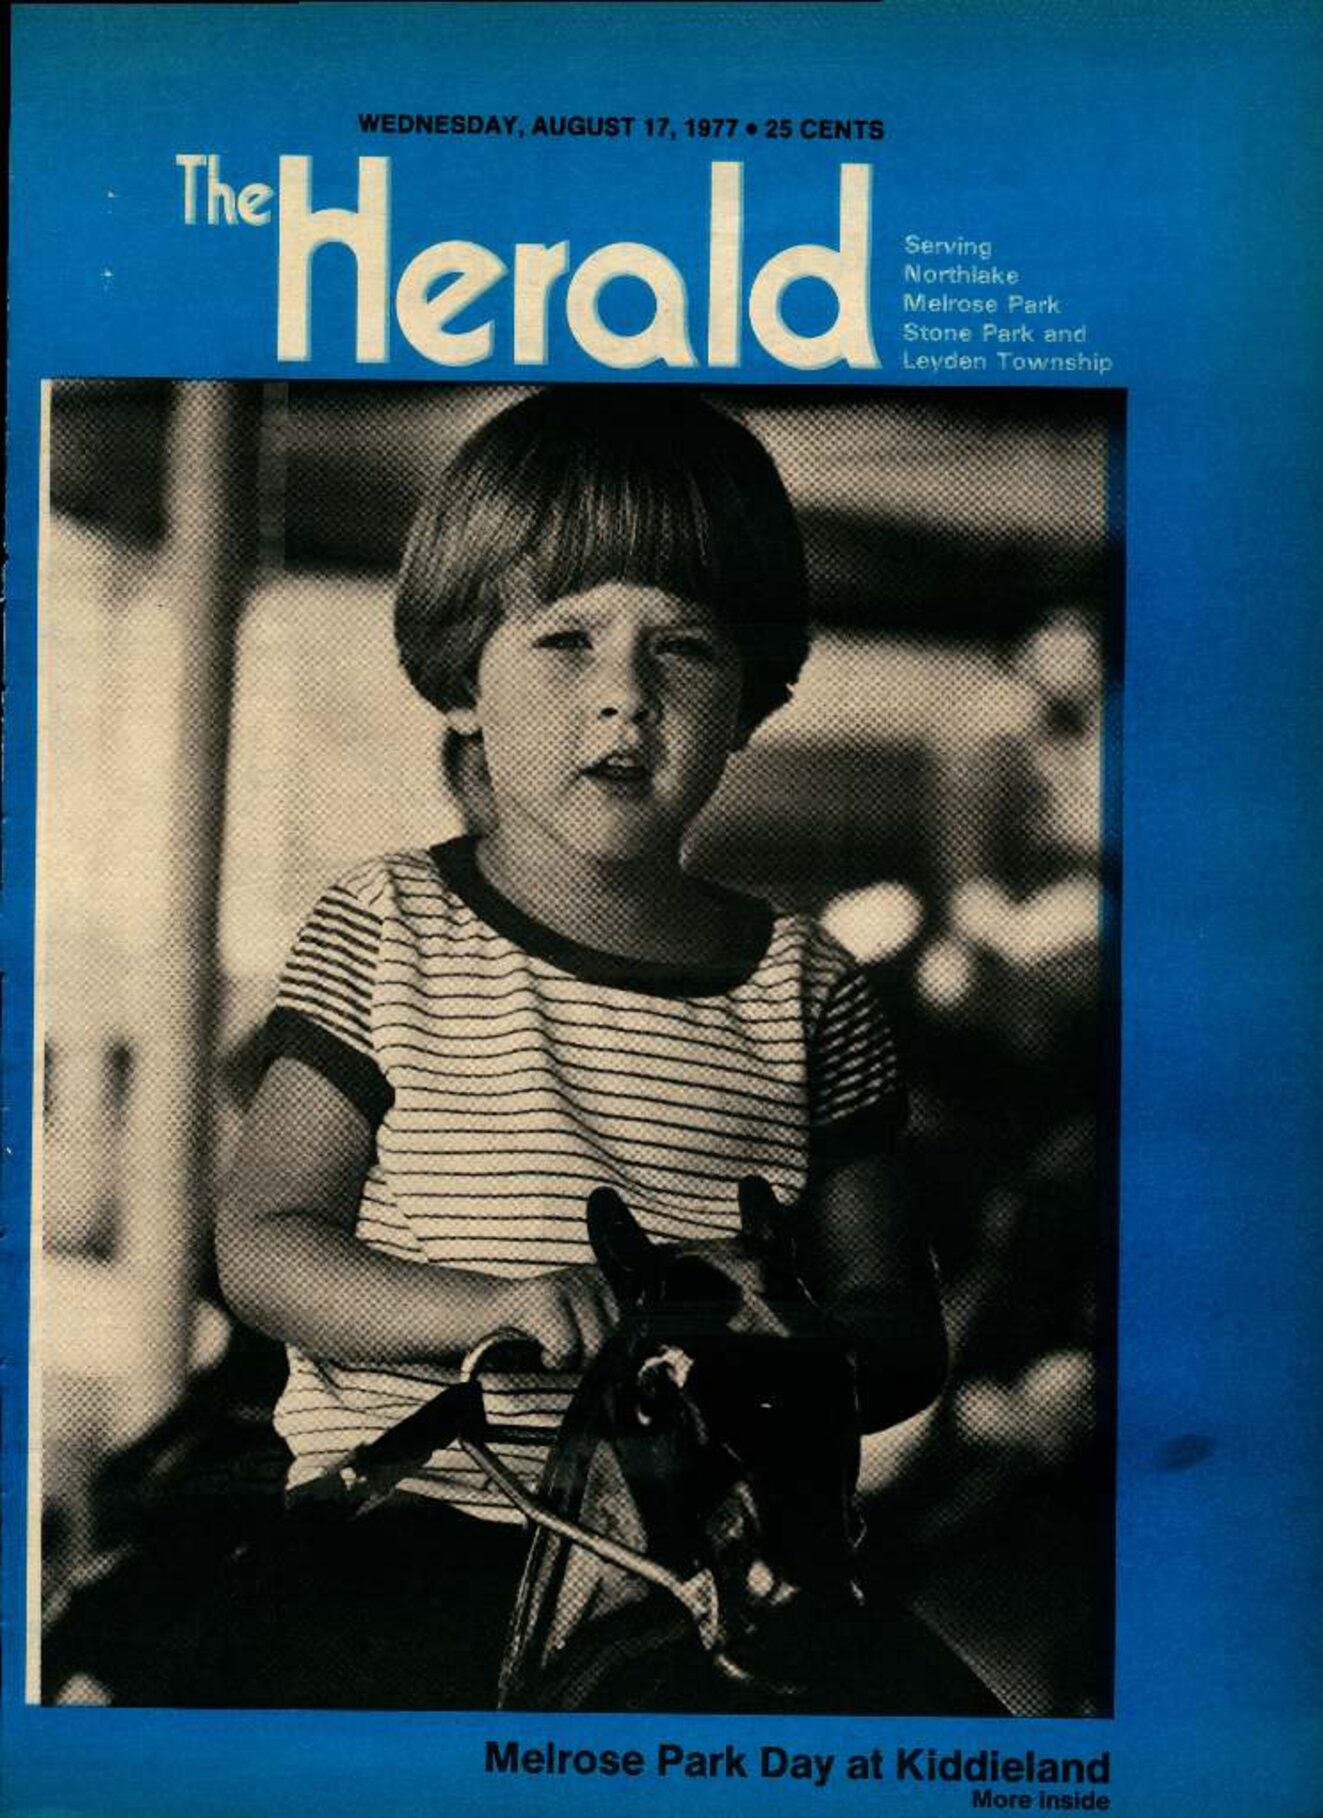 The Herald – 19770817